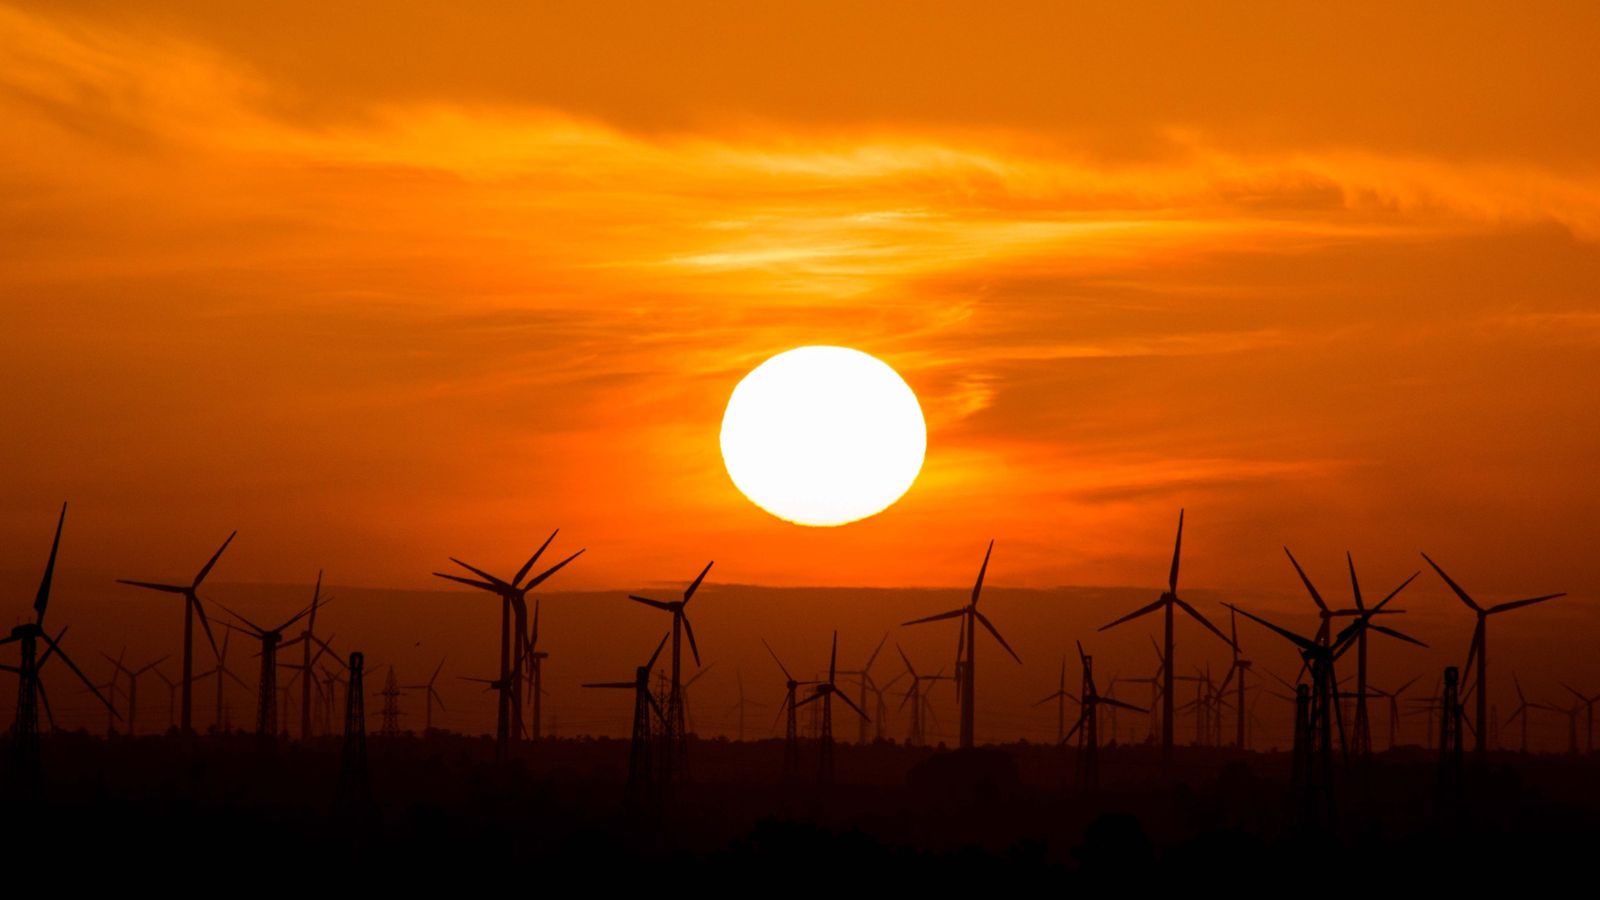 Wind turbines against a setting sun